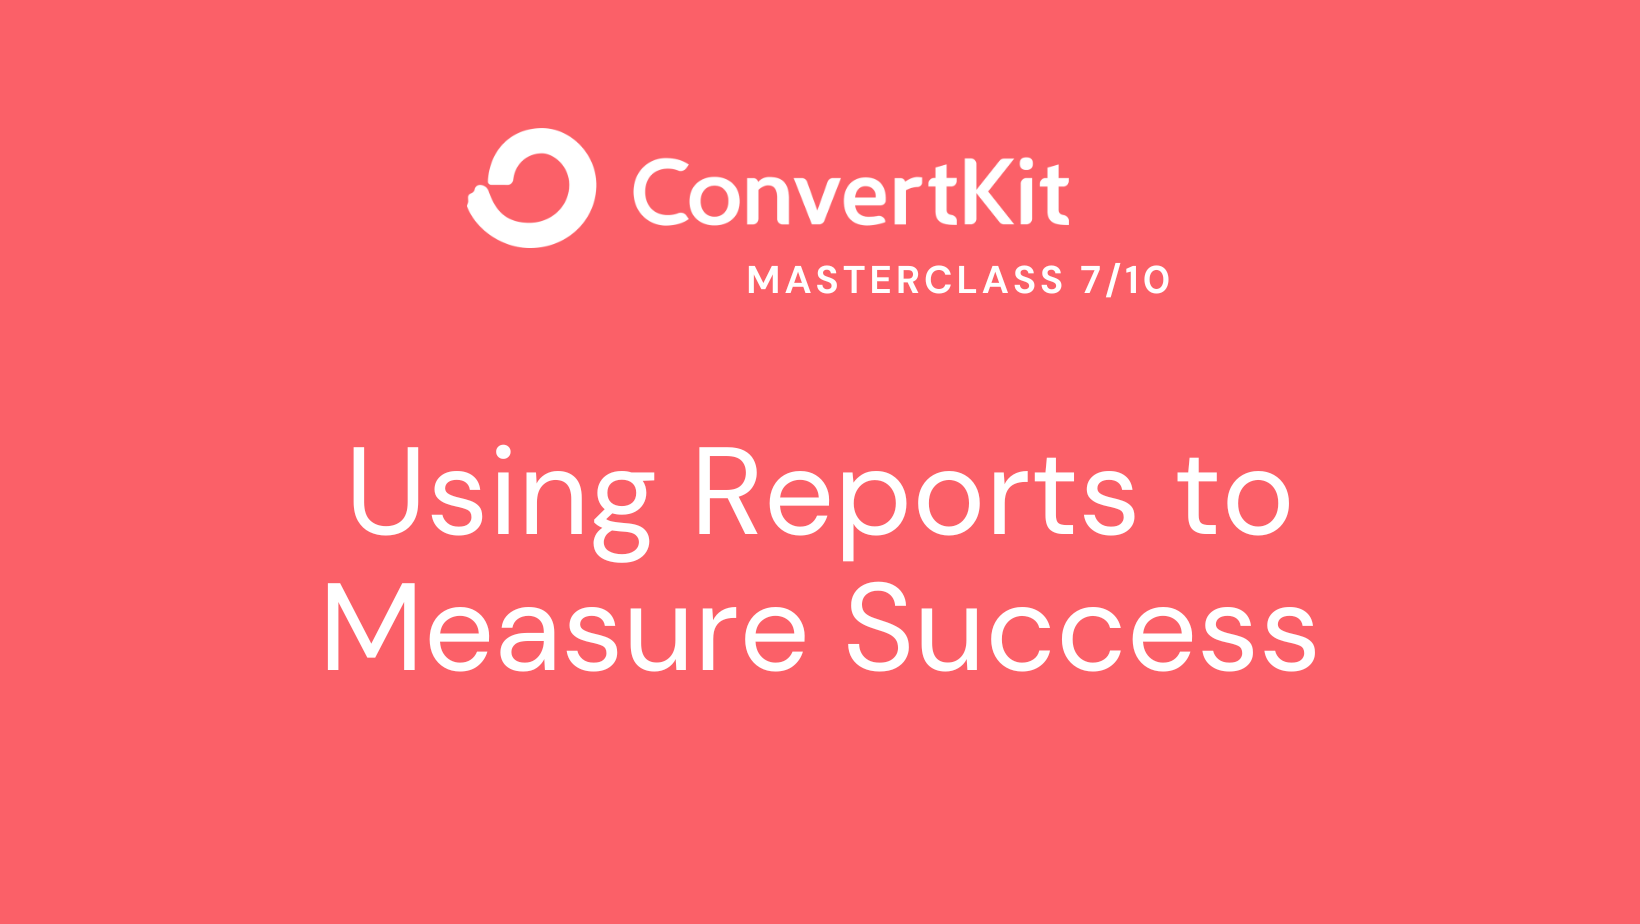 ConvertKit Masterclass 7/10 Using Reports to Measure Success